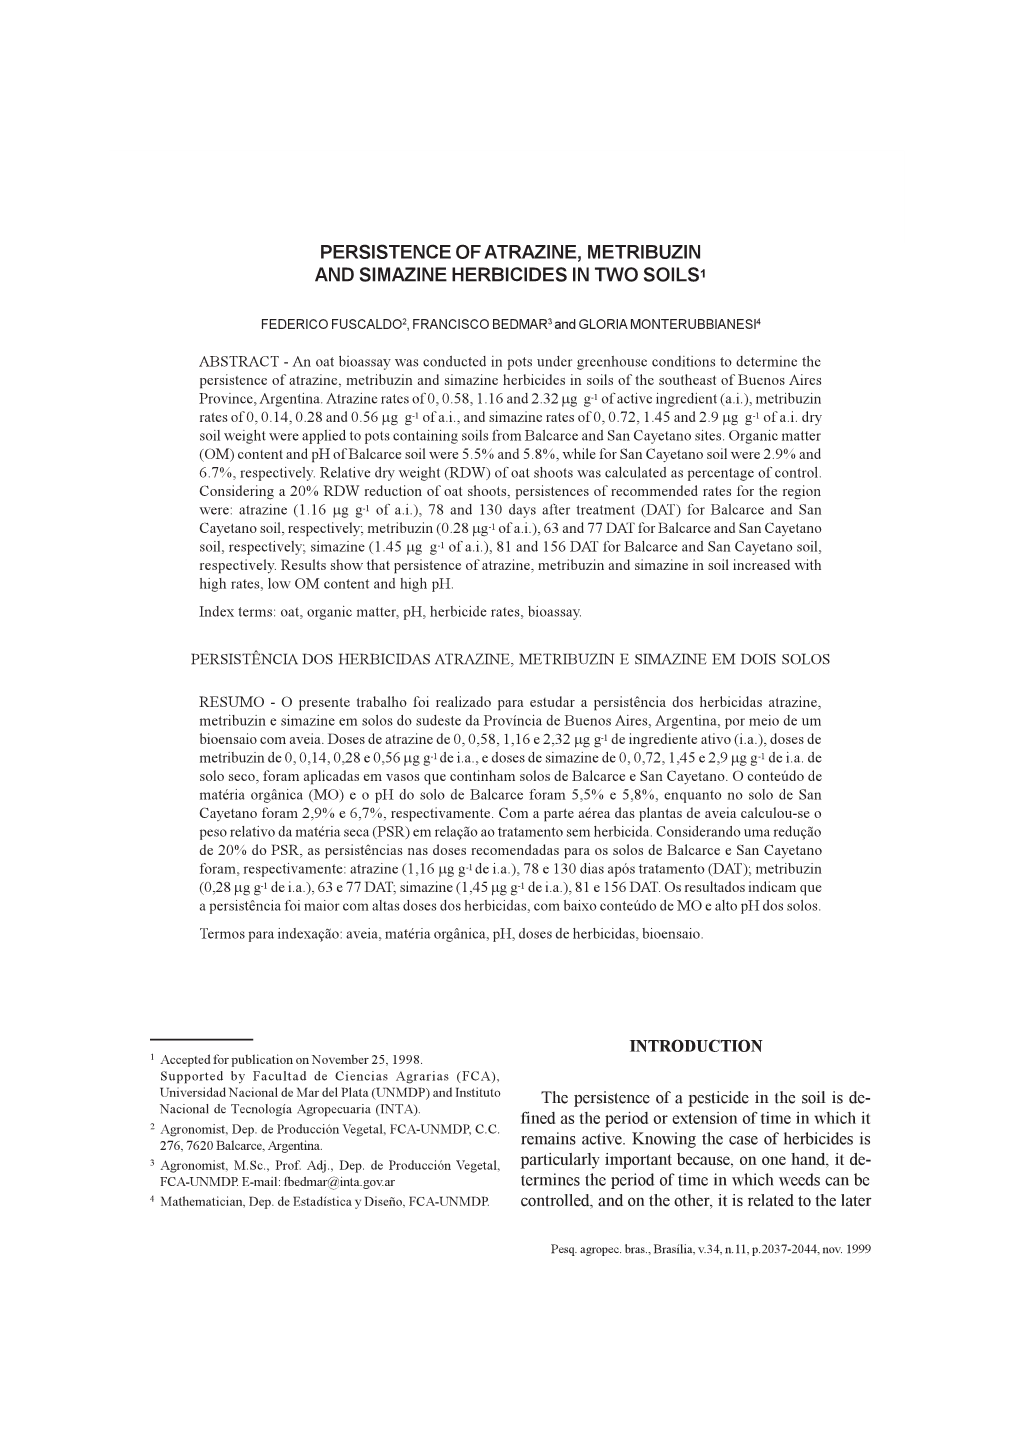 Persistence of Atrazine, Metribuzin and Simazine Herbicides in Two Soils1